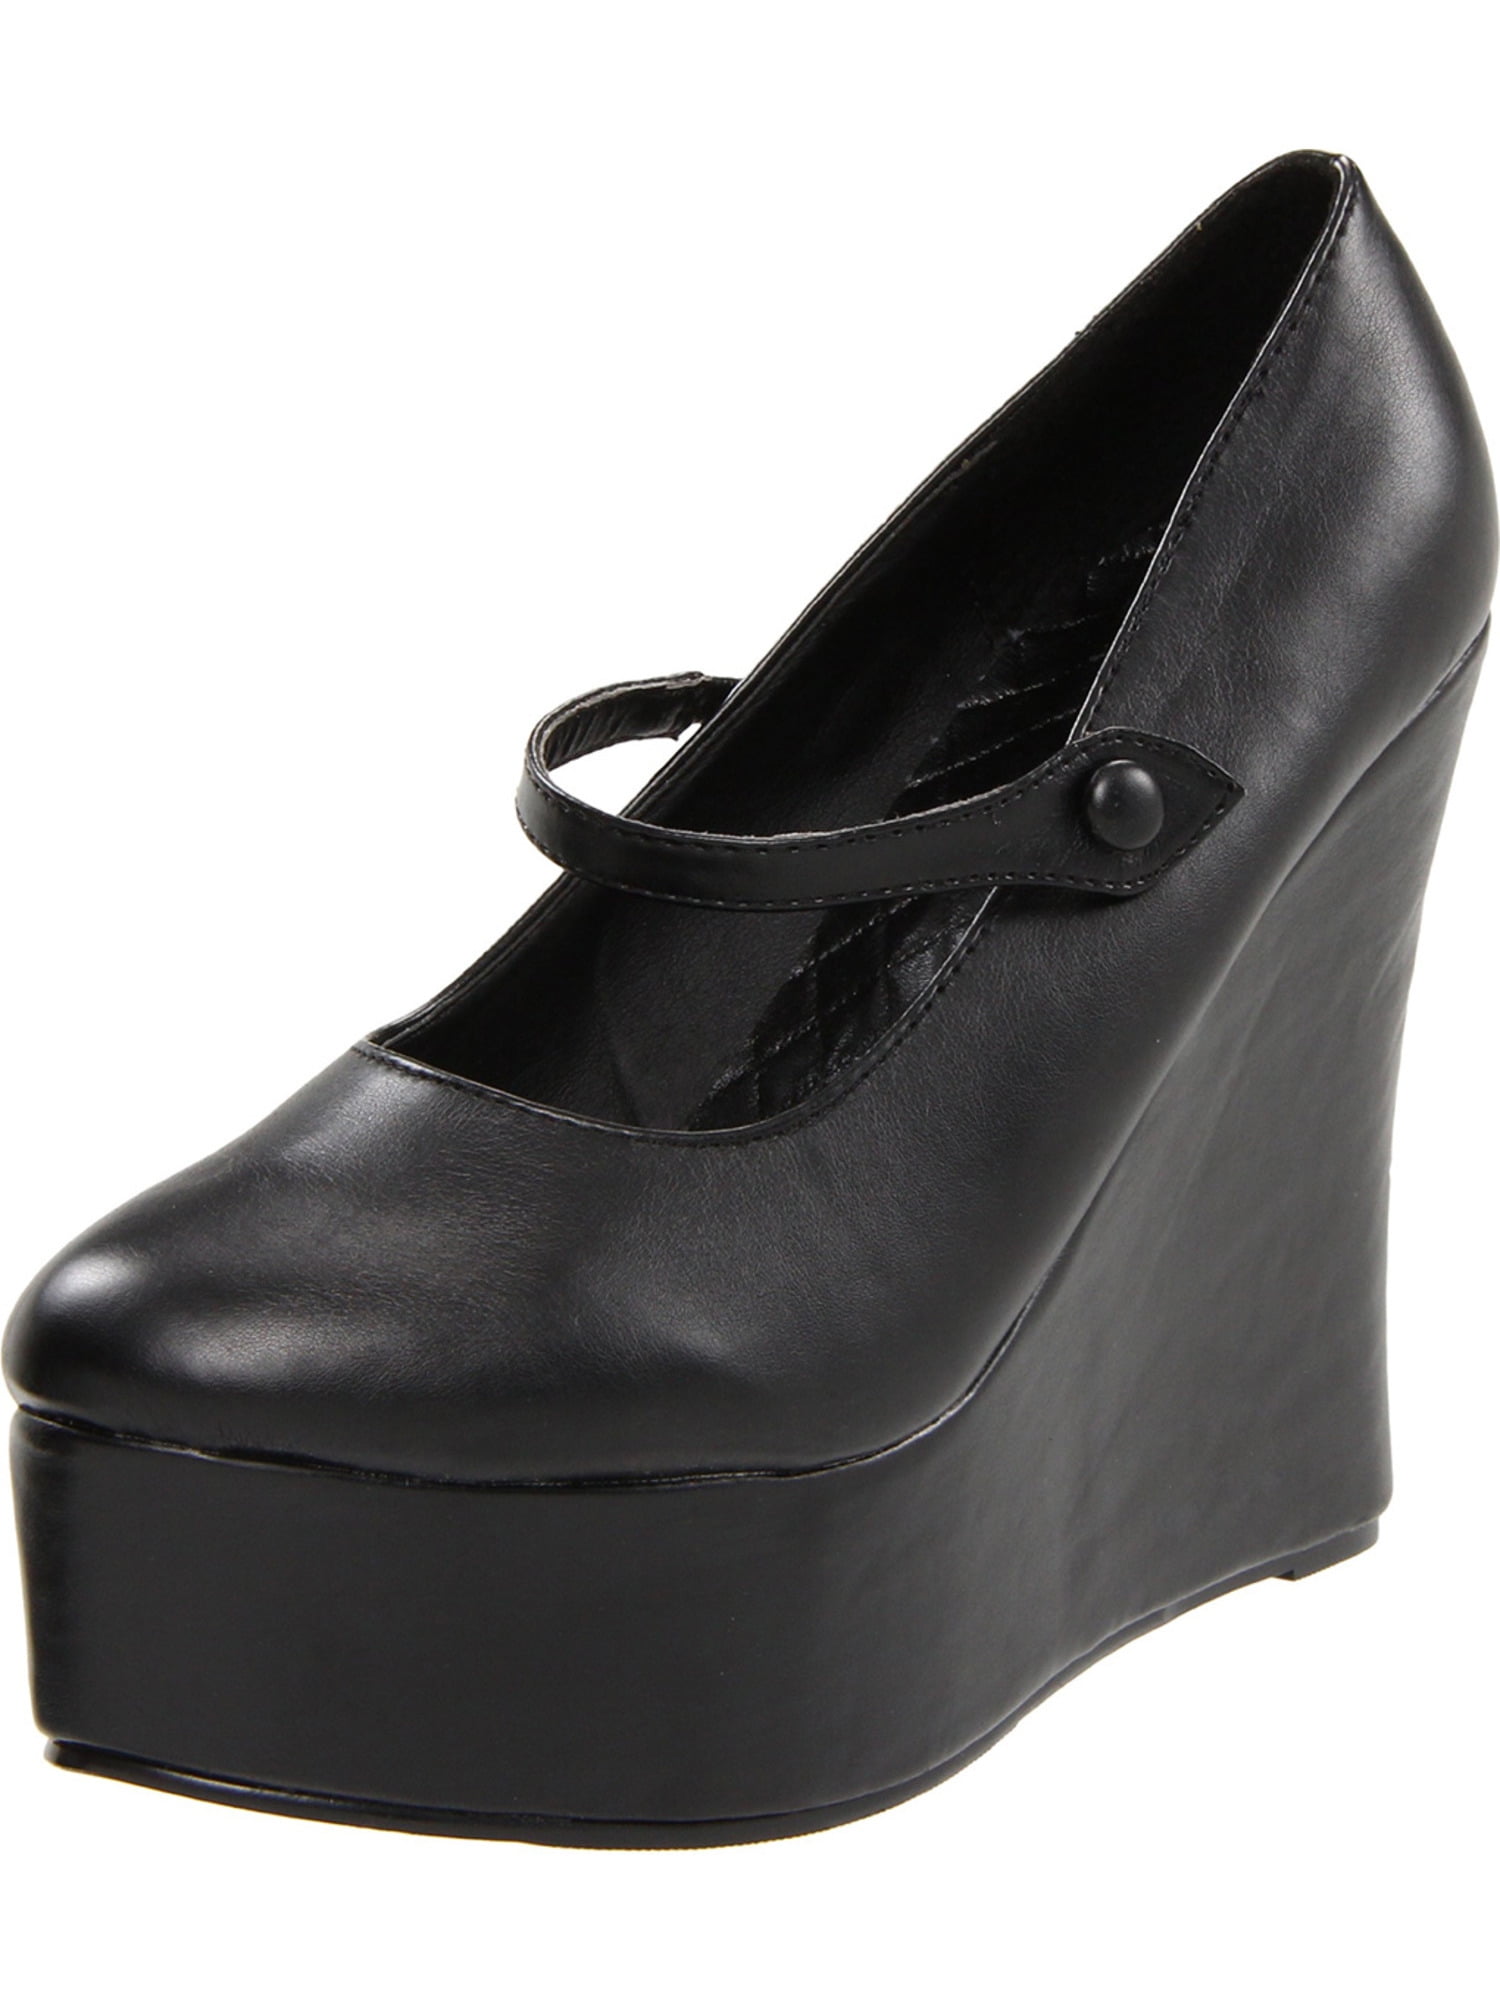 black wedge mary jane shoes